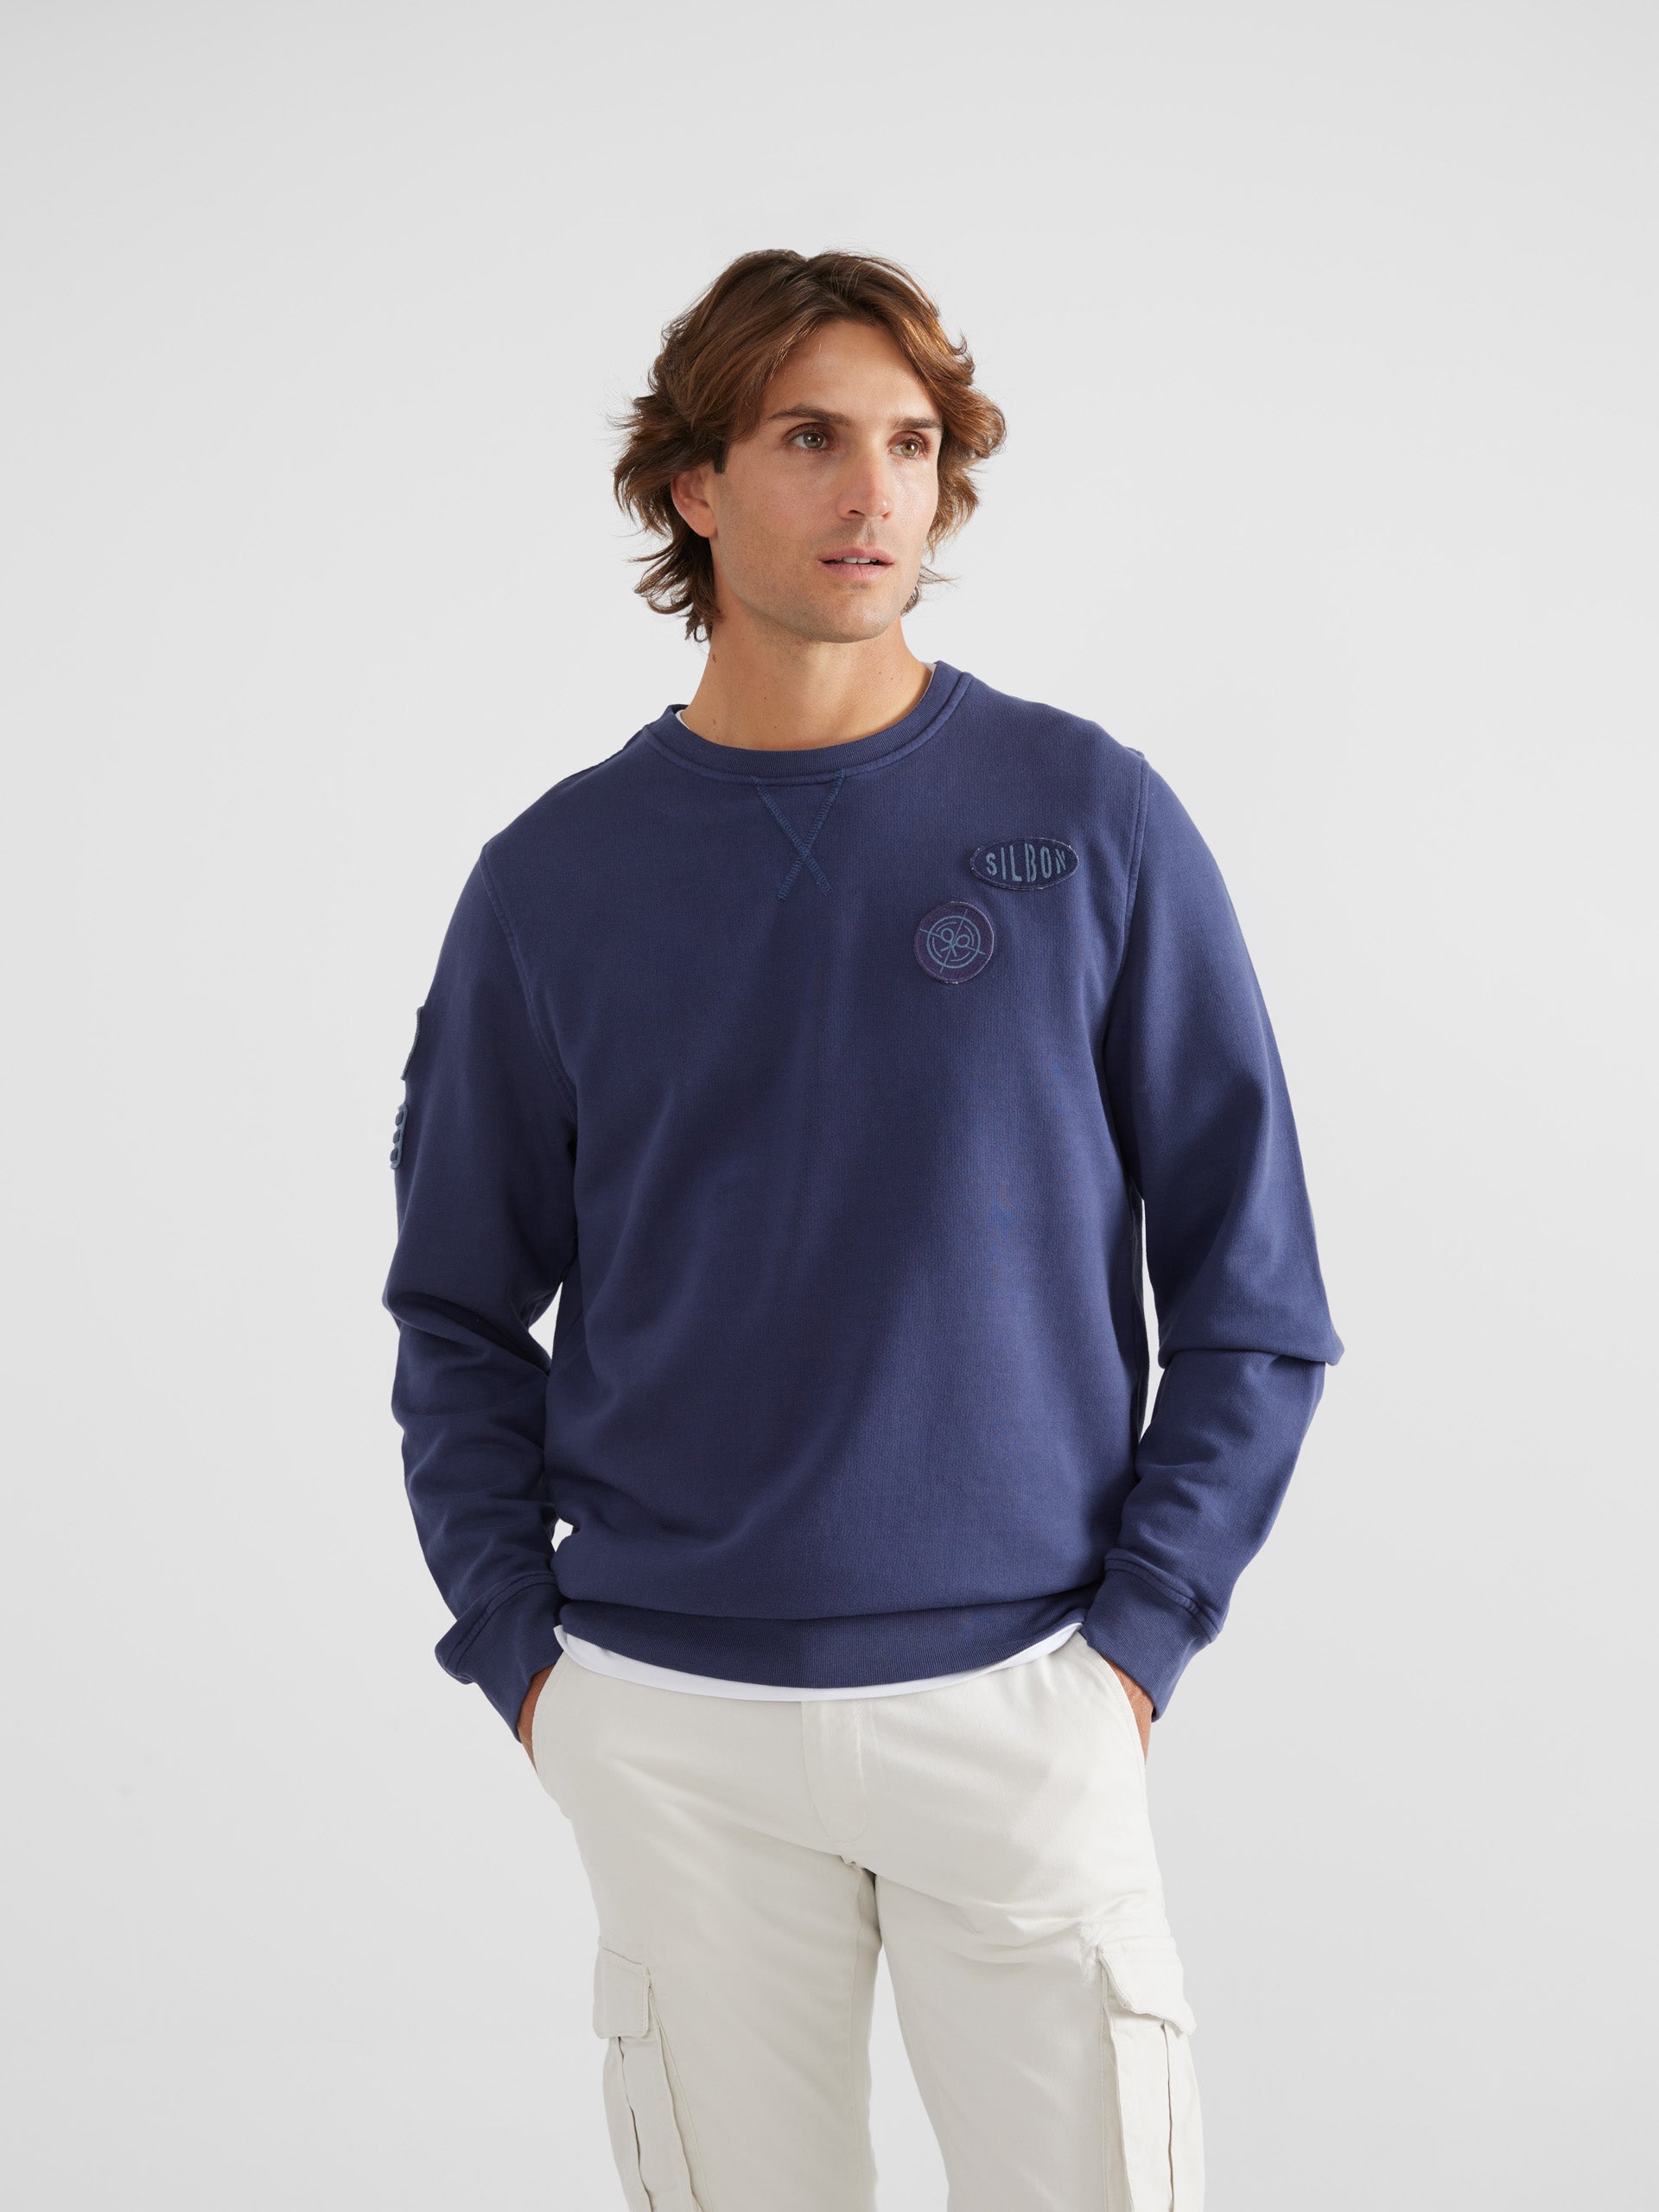 Navy blue patch sweatshirt